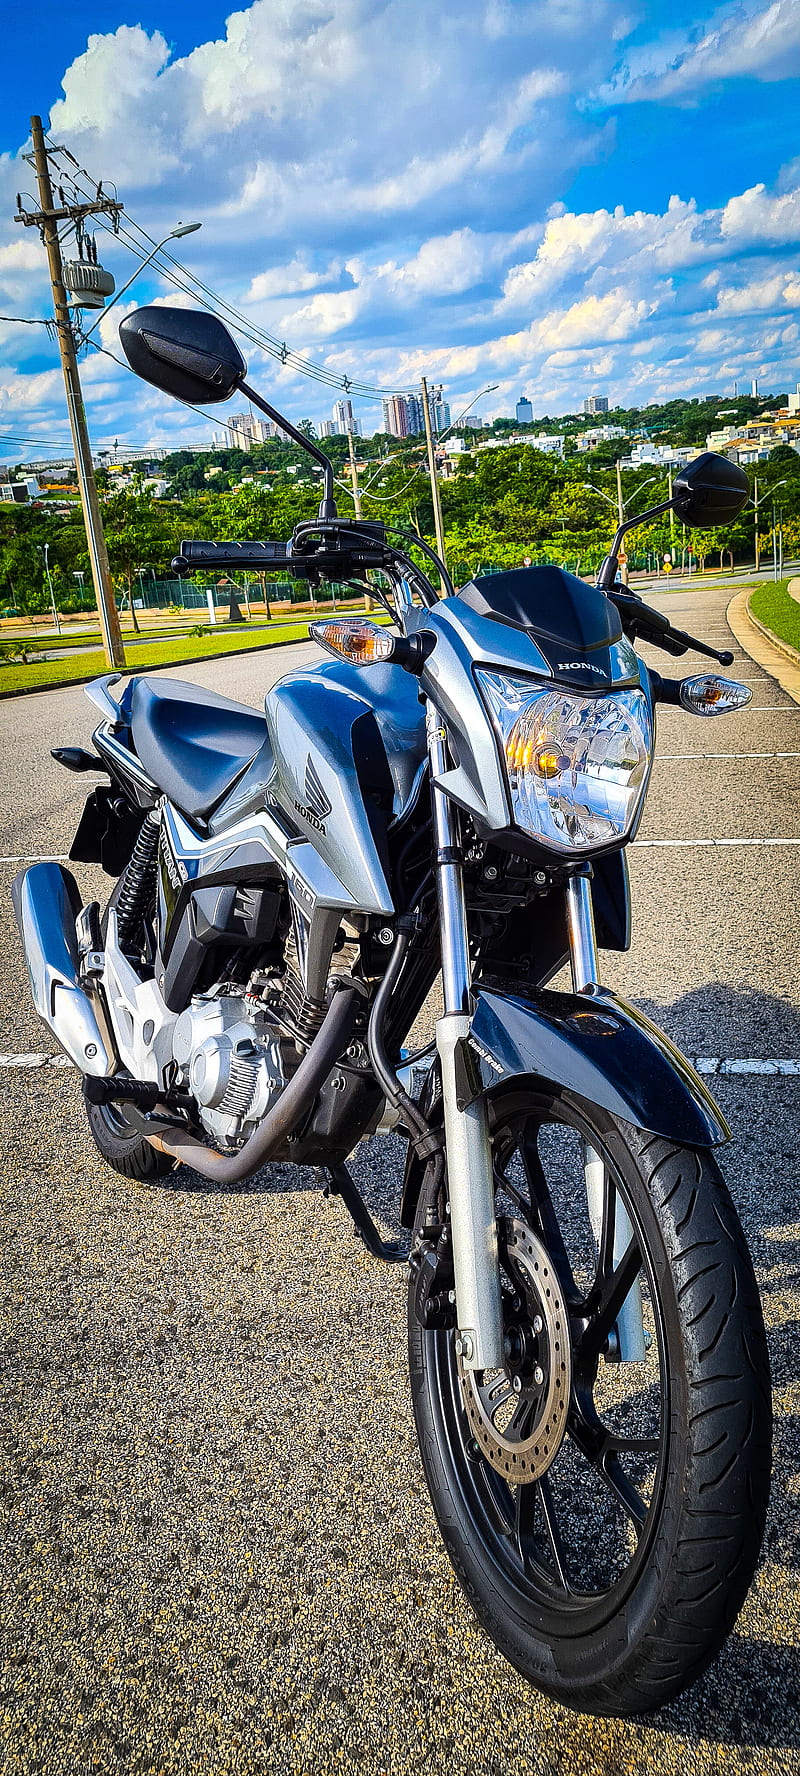 HONDA CG TITAN 160, 150, biker, fan, mix, moto, motorcycle, HD